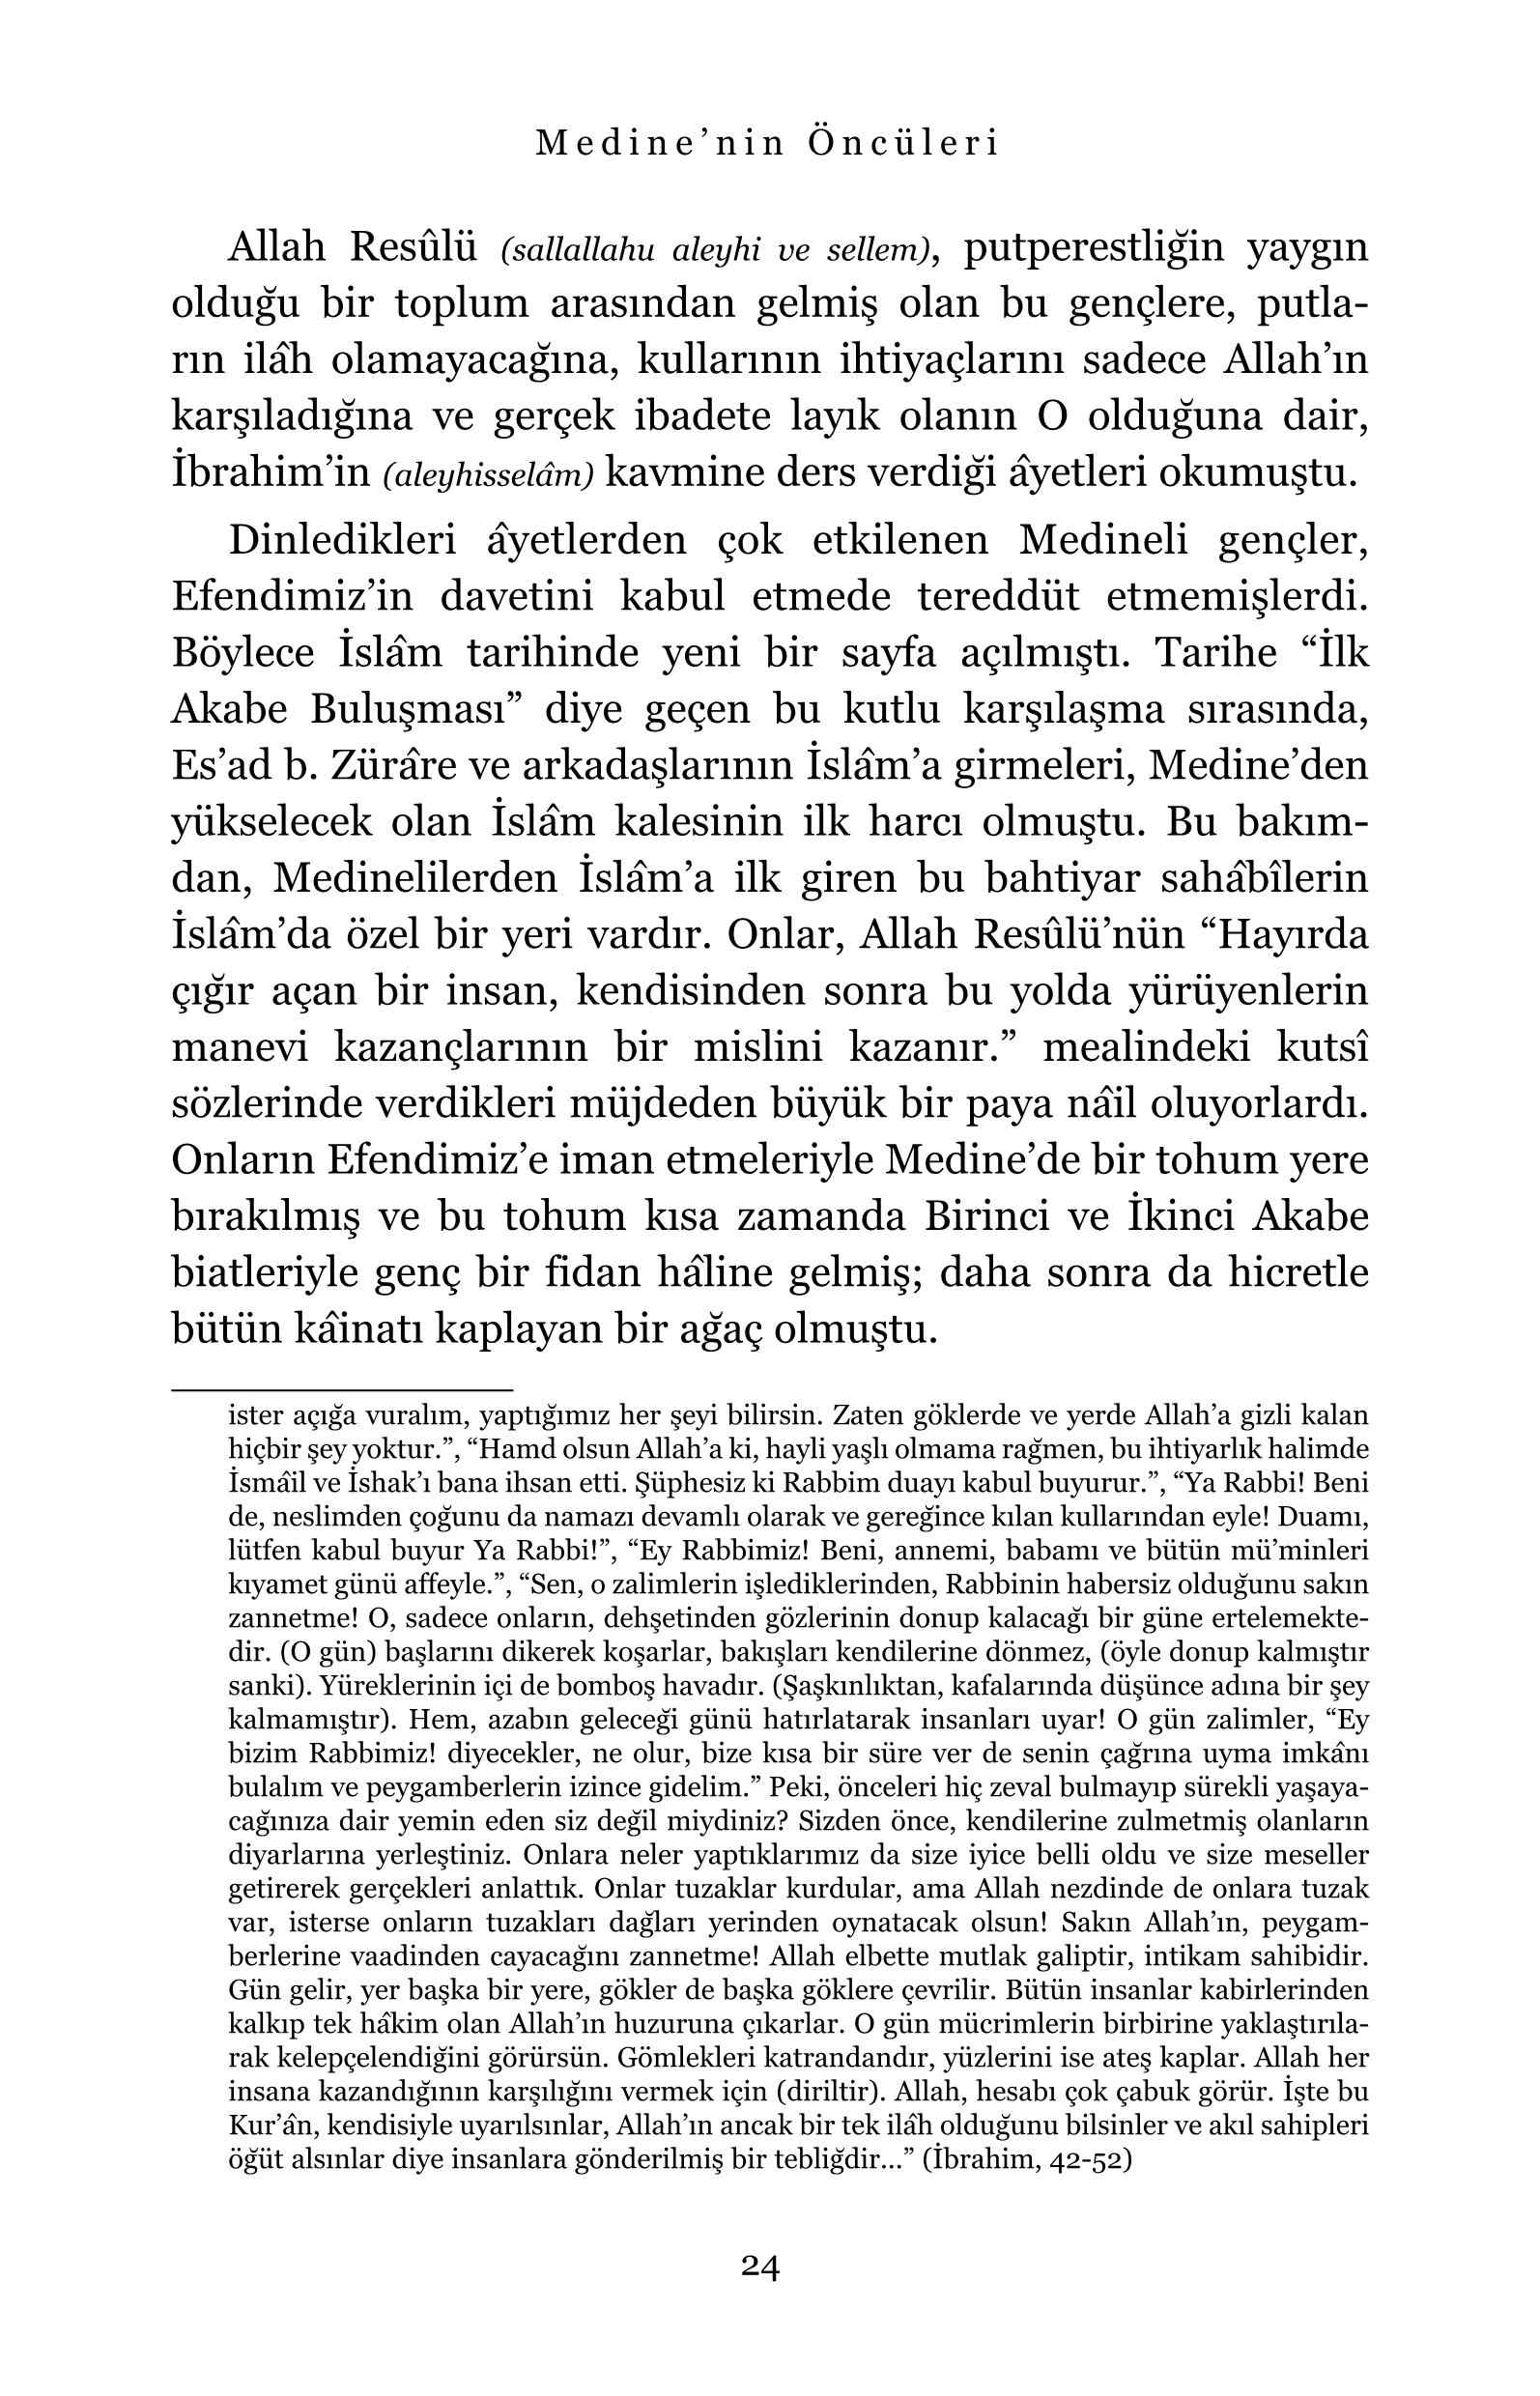 Saim Ari - Medinenin Oncüleri - IsikYayinlari.pdf, 342-Sayfa 